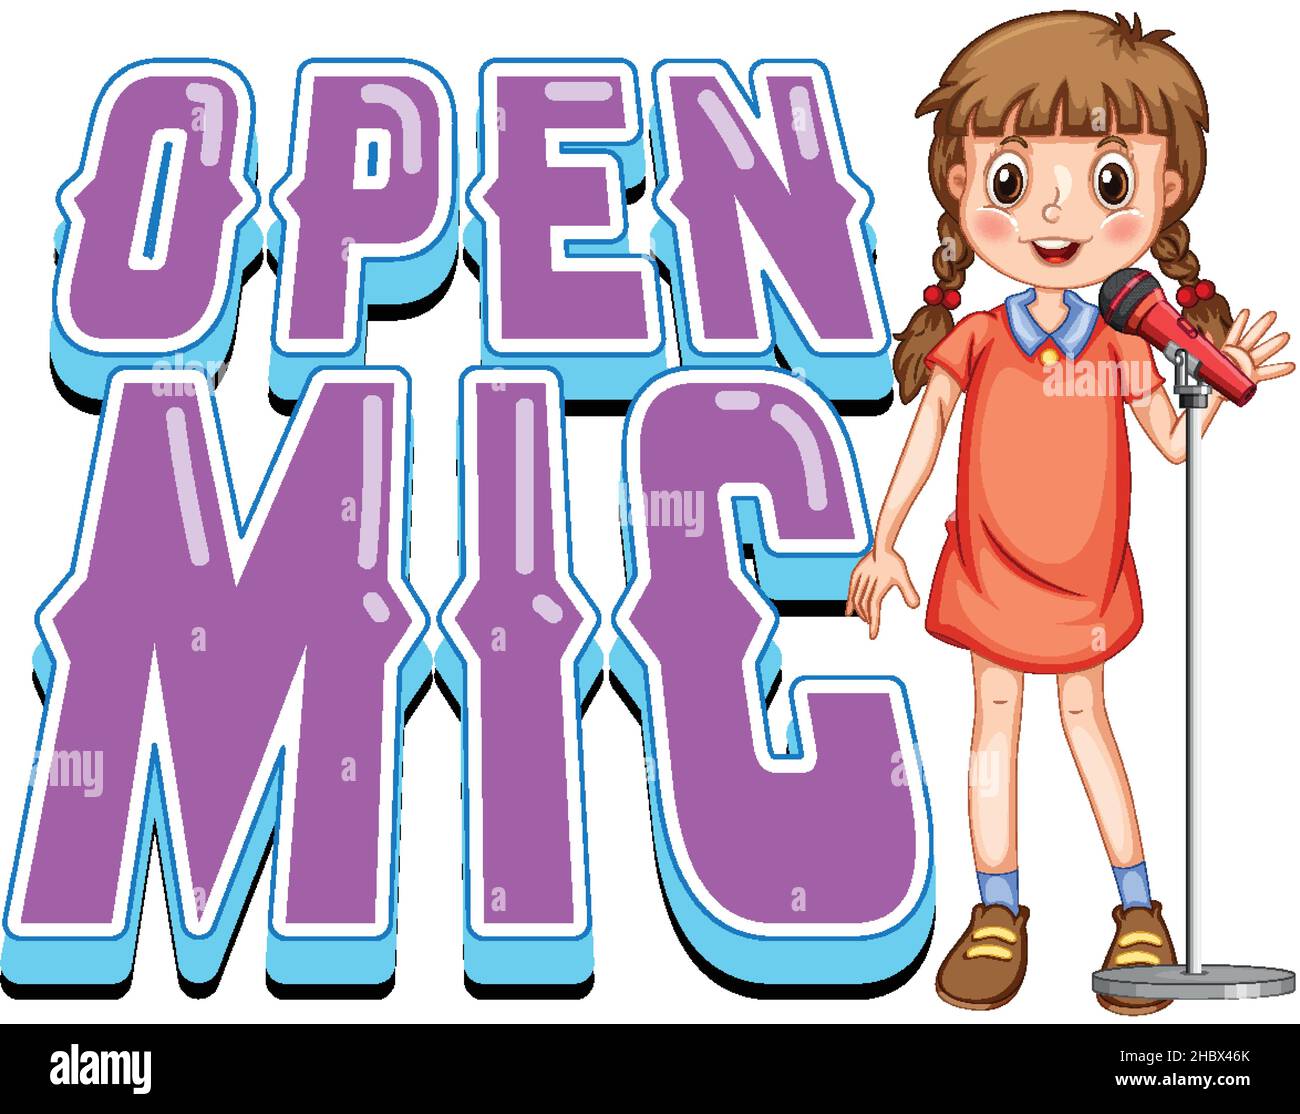 Open mic logo design with singer girl cartoon character illustration ...